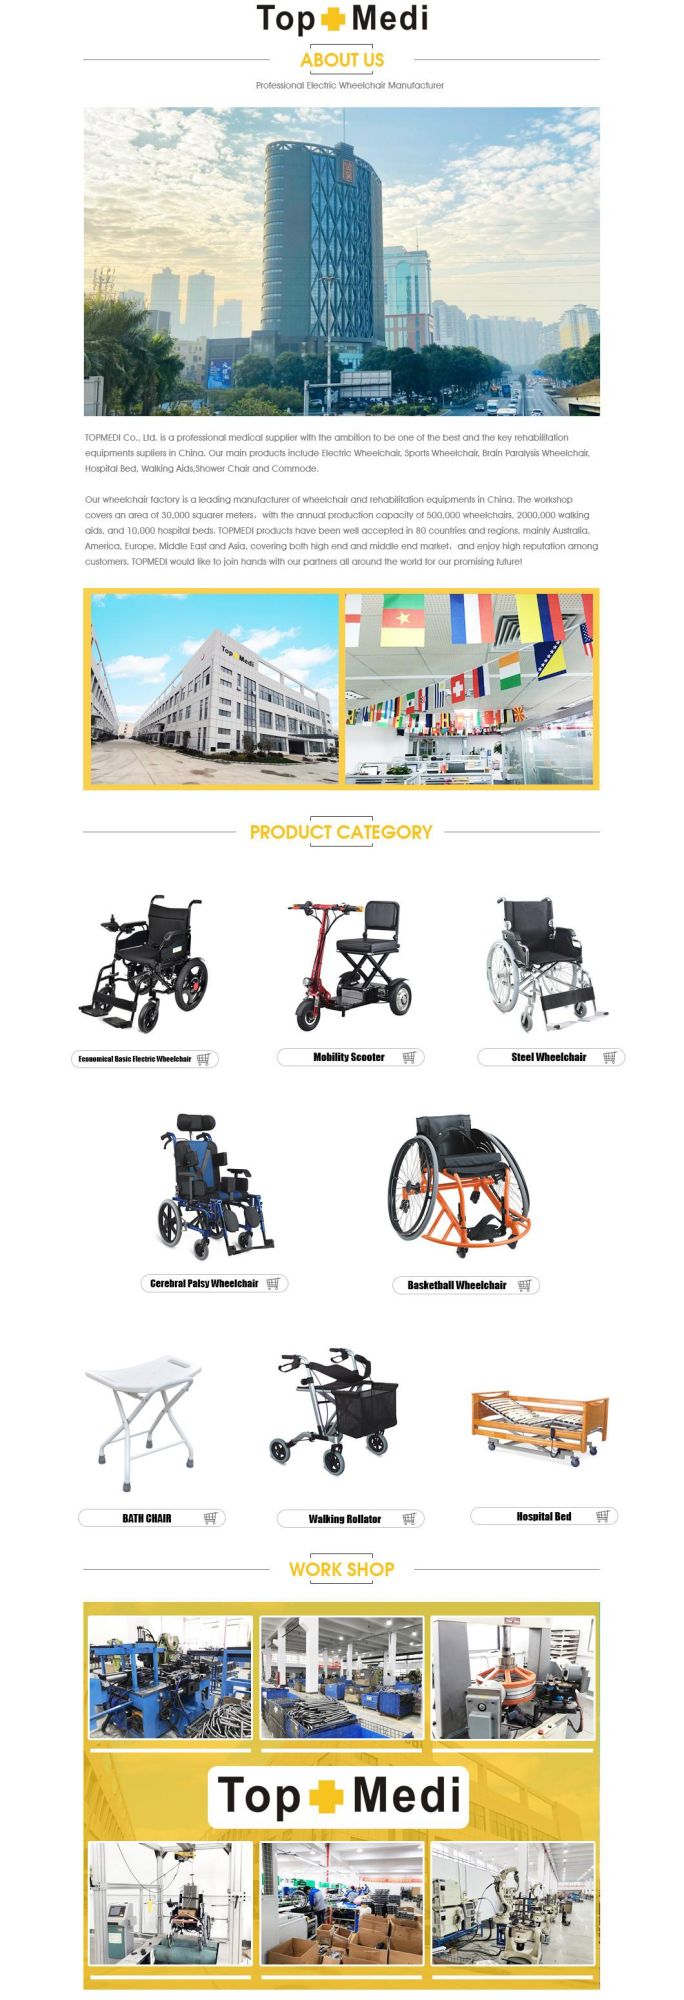 Health Care Supplies Folding Lightweight Cheapest Electric Wheelchair